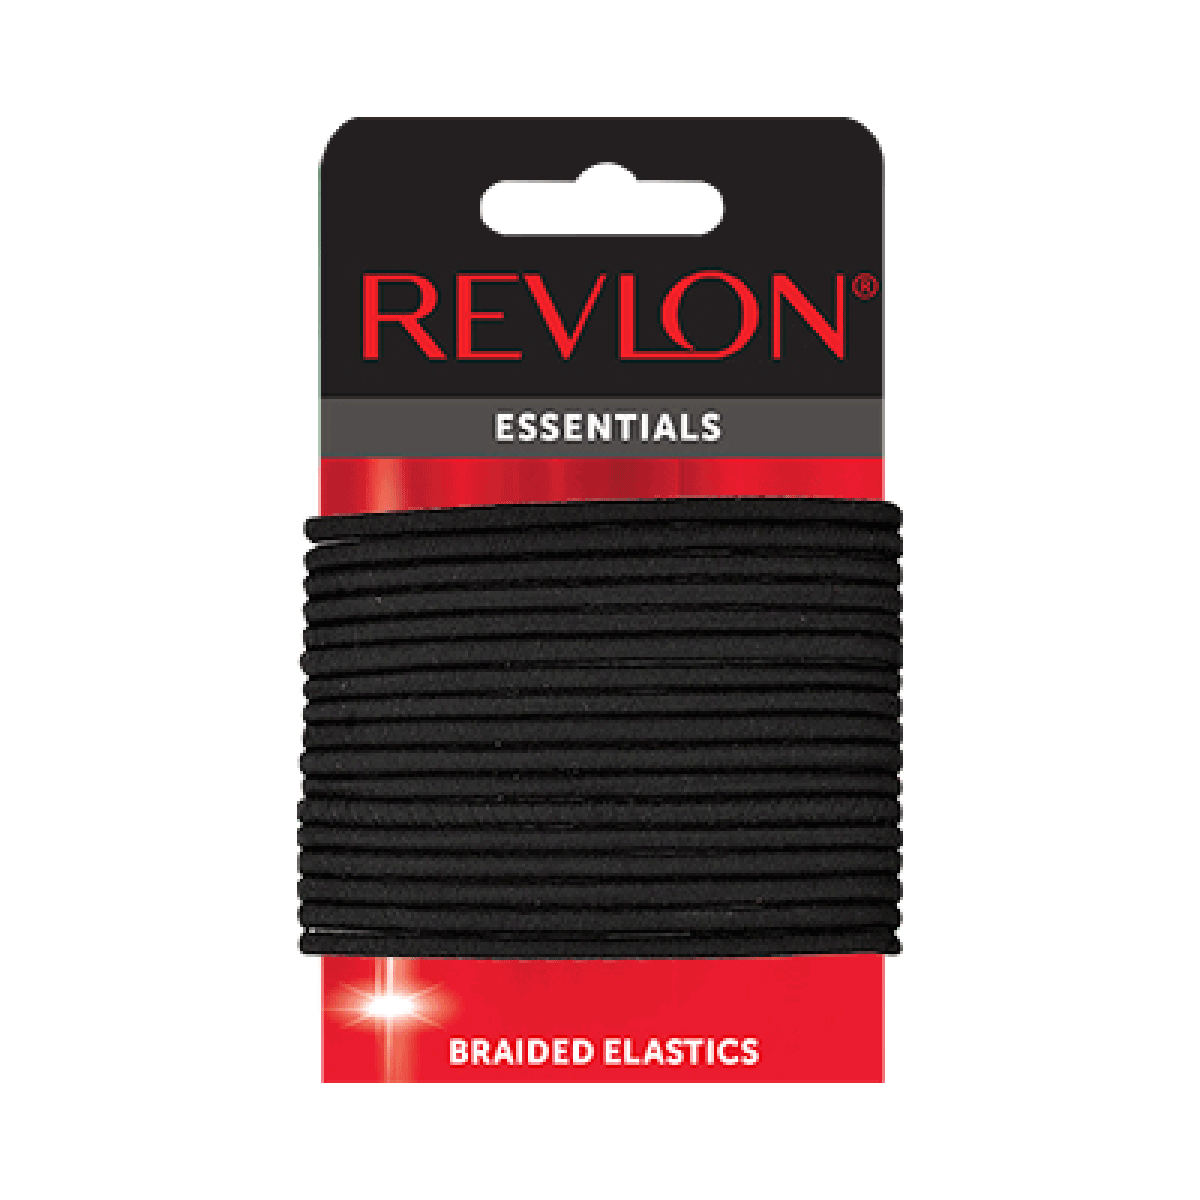 Colets Revlon Black Medium Braided Elastics Línea Essentials (18 unidades)